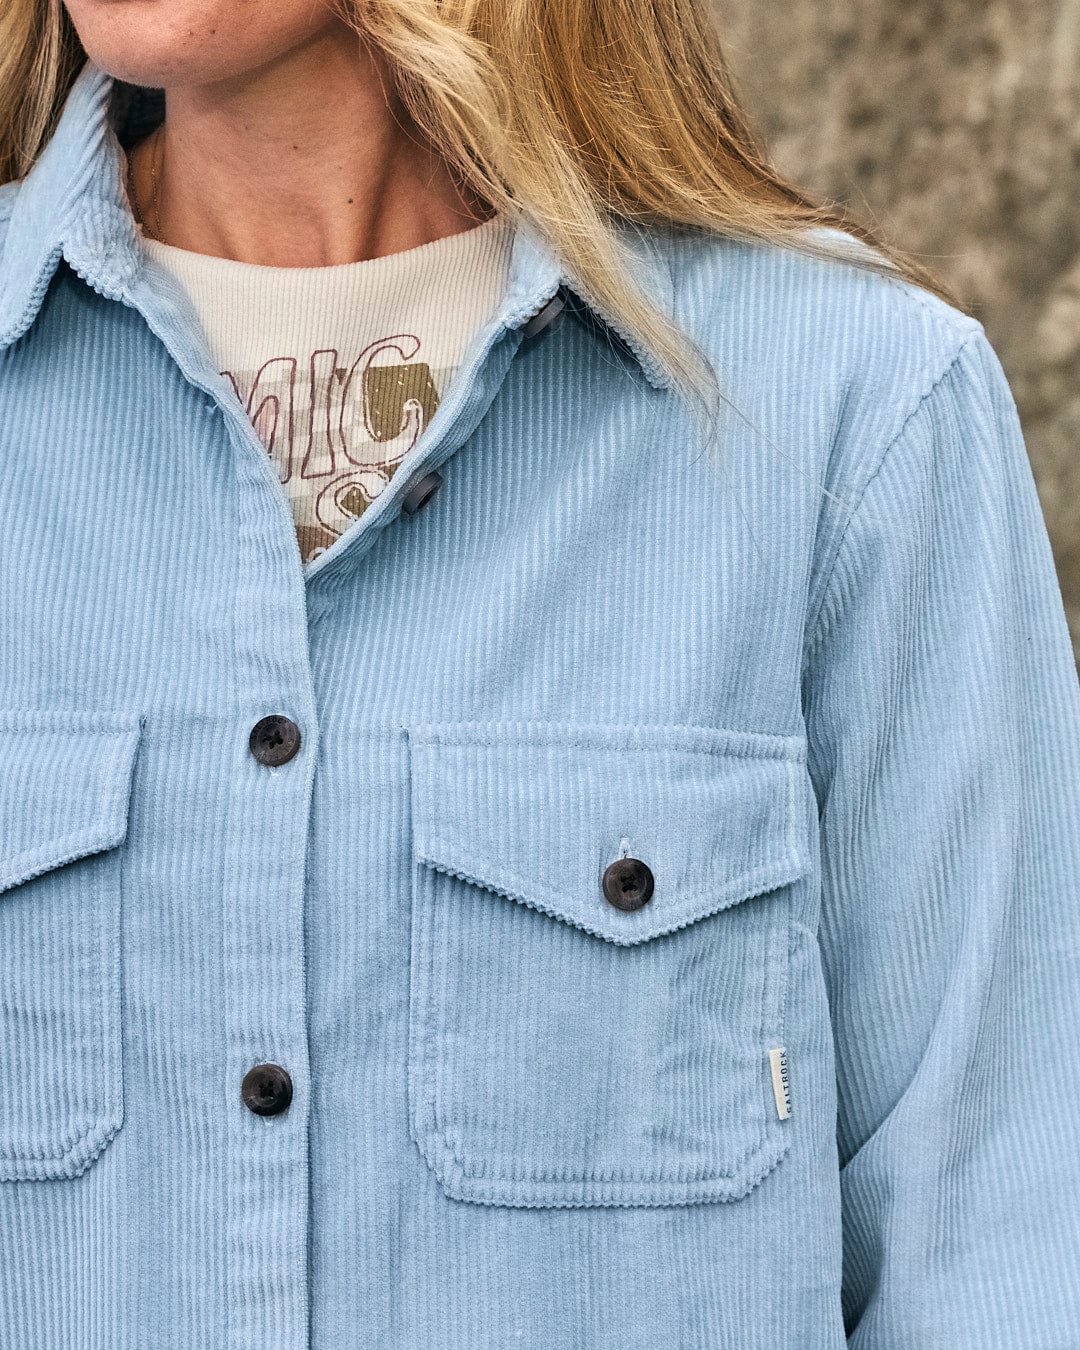 A woman wearing a light blue corduroy Saltrock Maddox - Womens Cord Shirt.